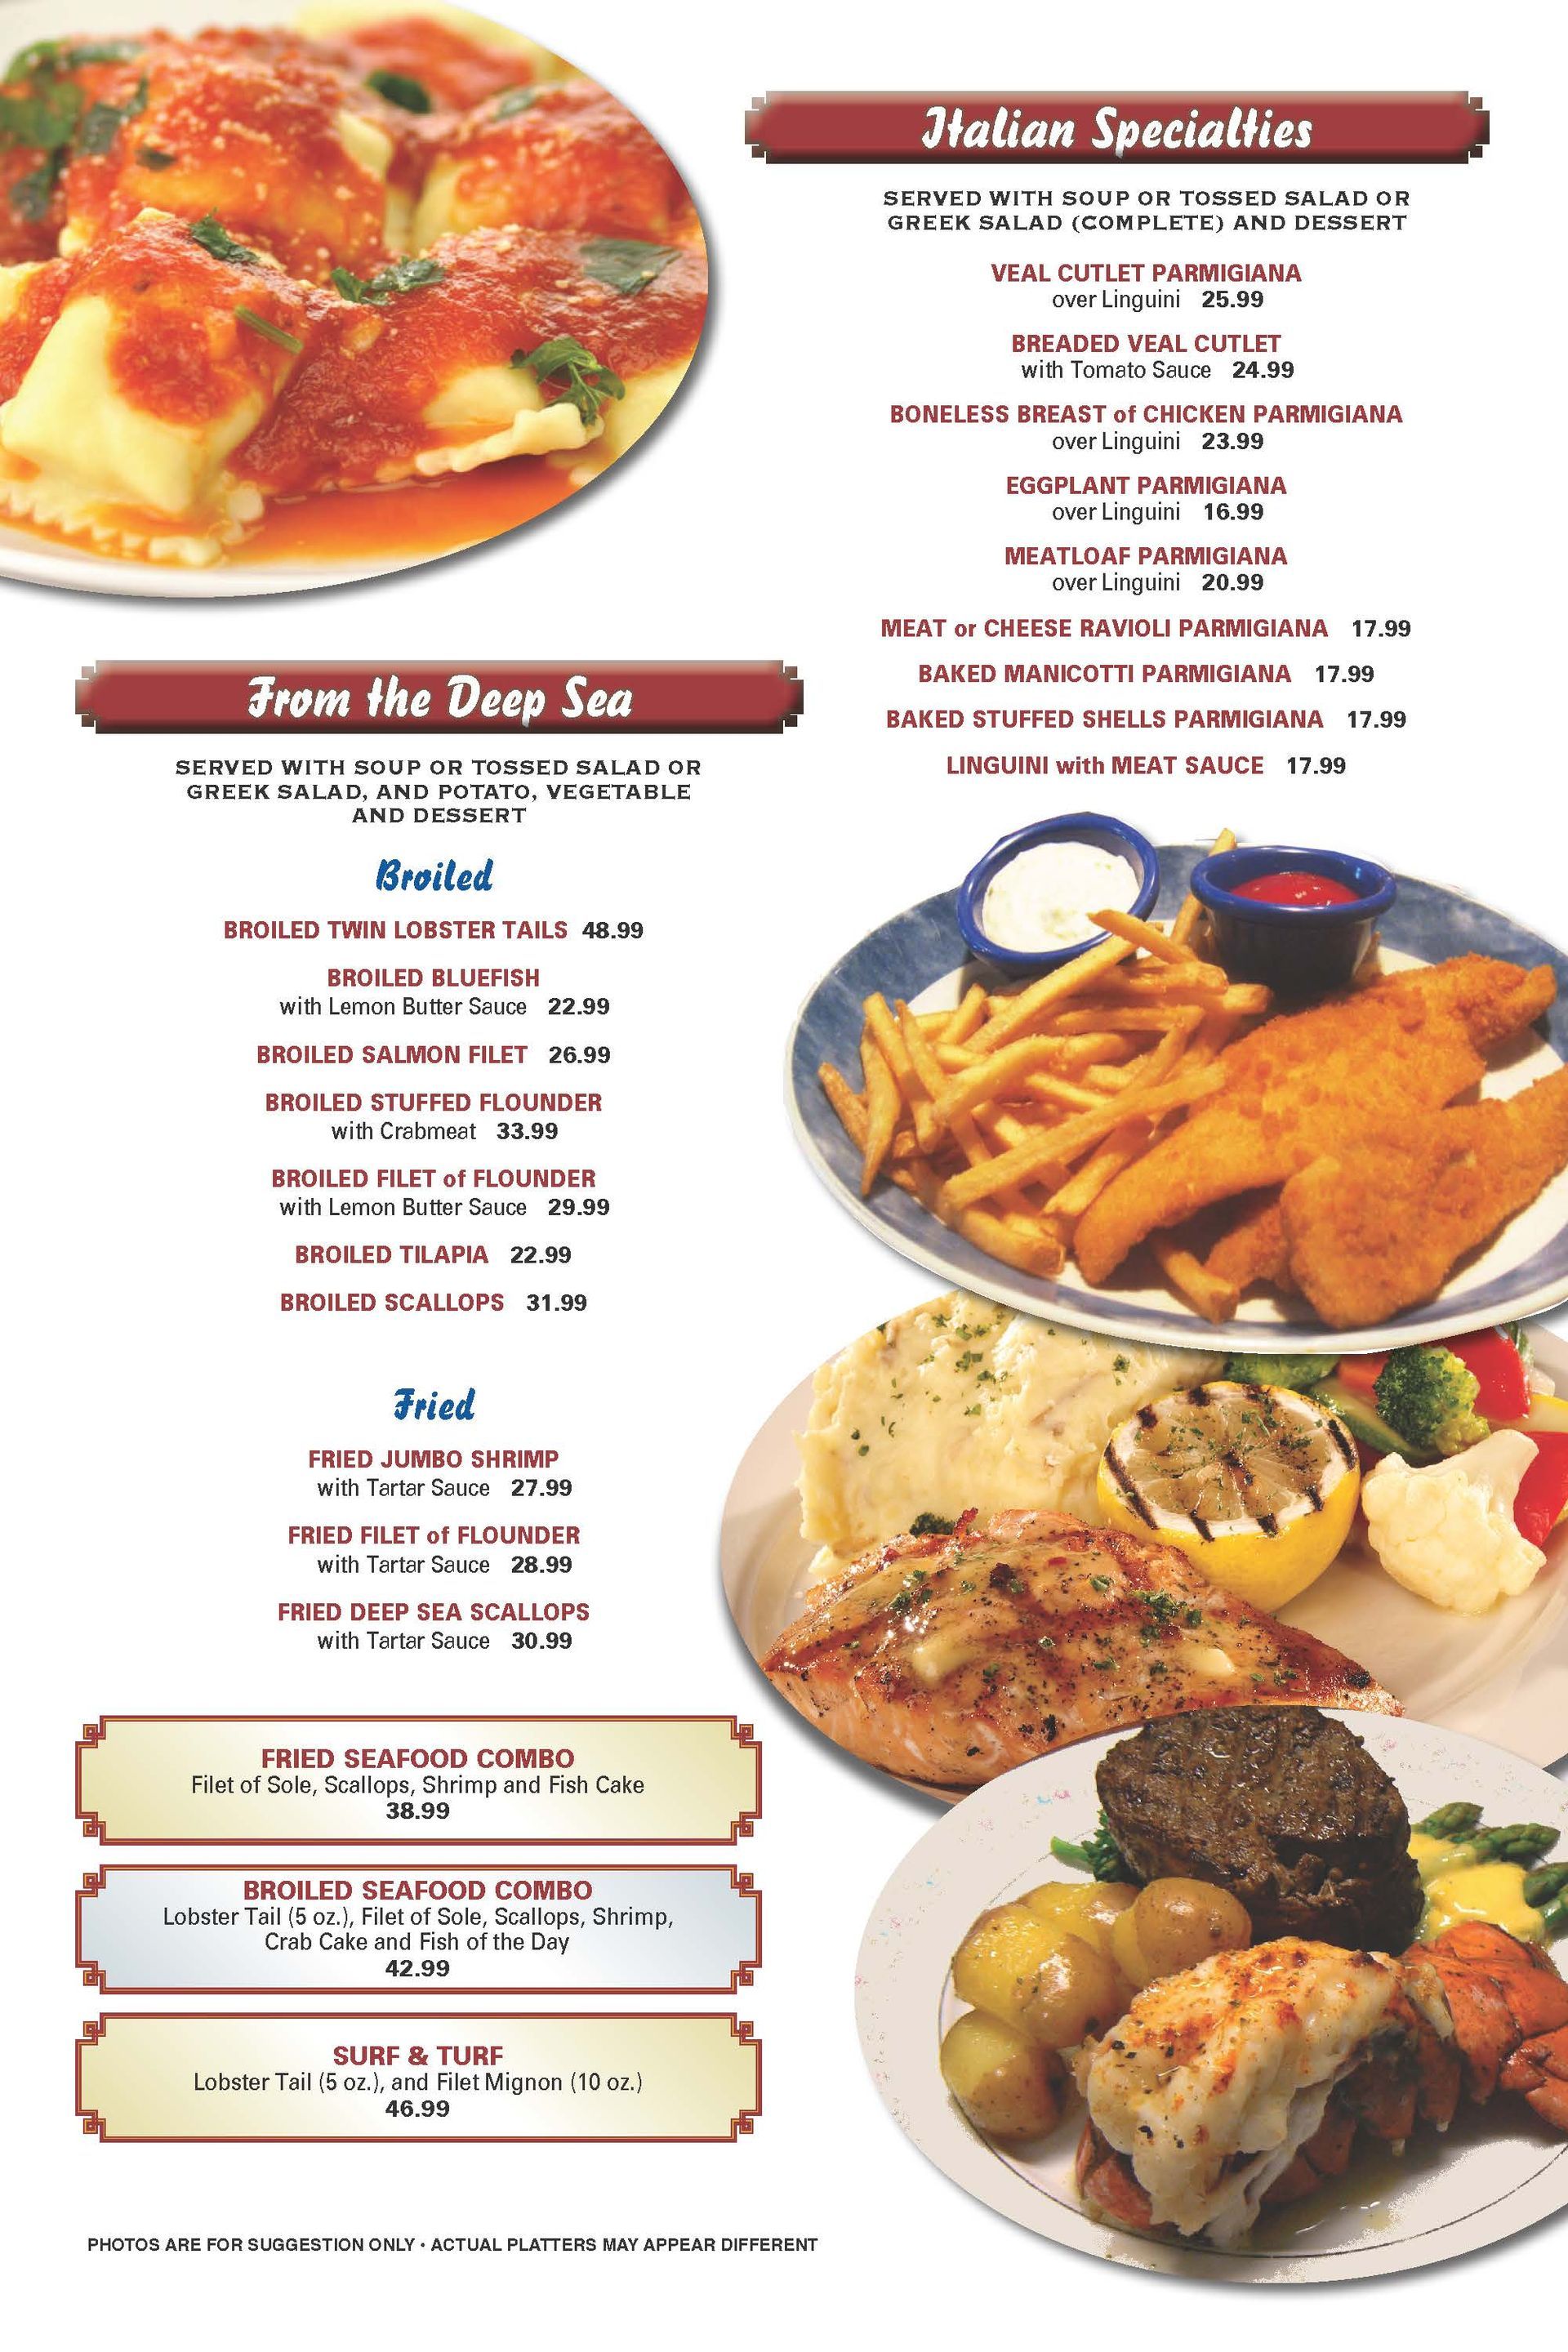 a menu for a restaurant called italian specialties — The Black Horse Breakfast in Ephraim, NJ